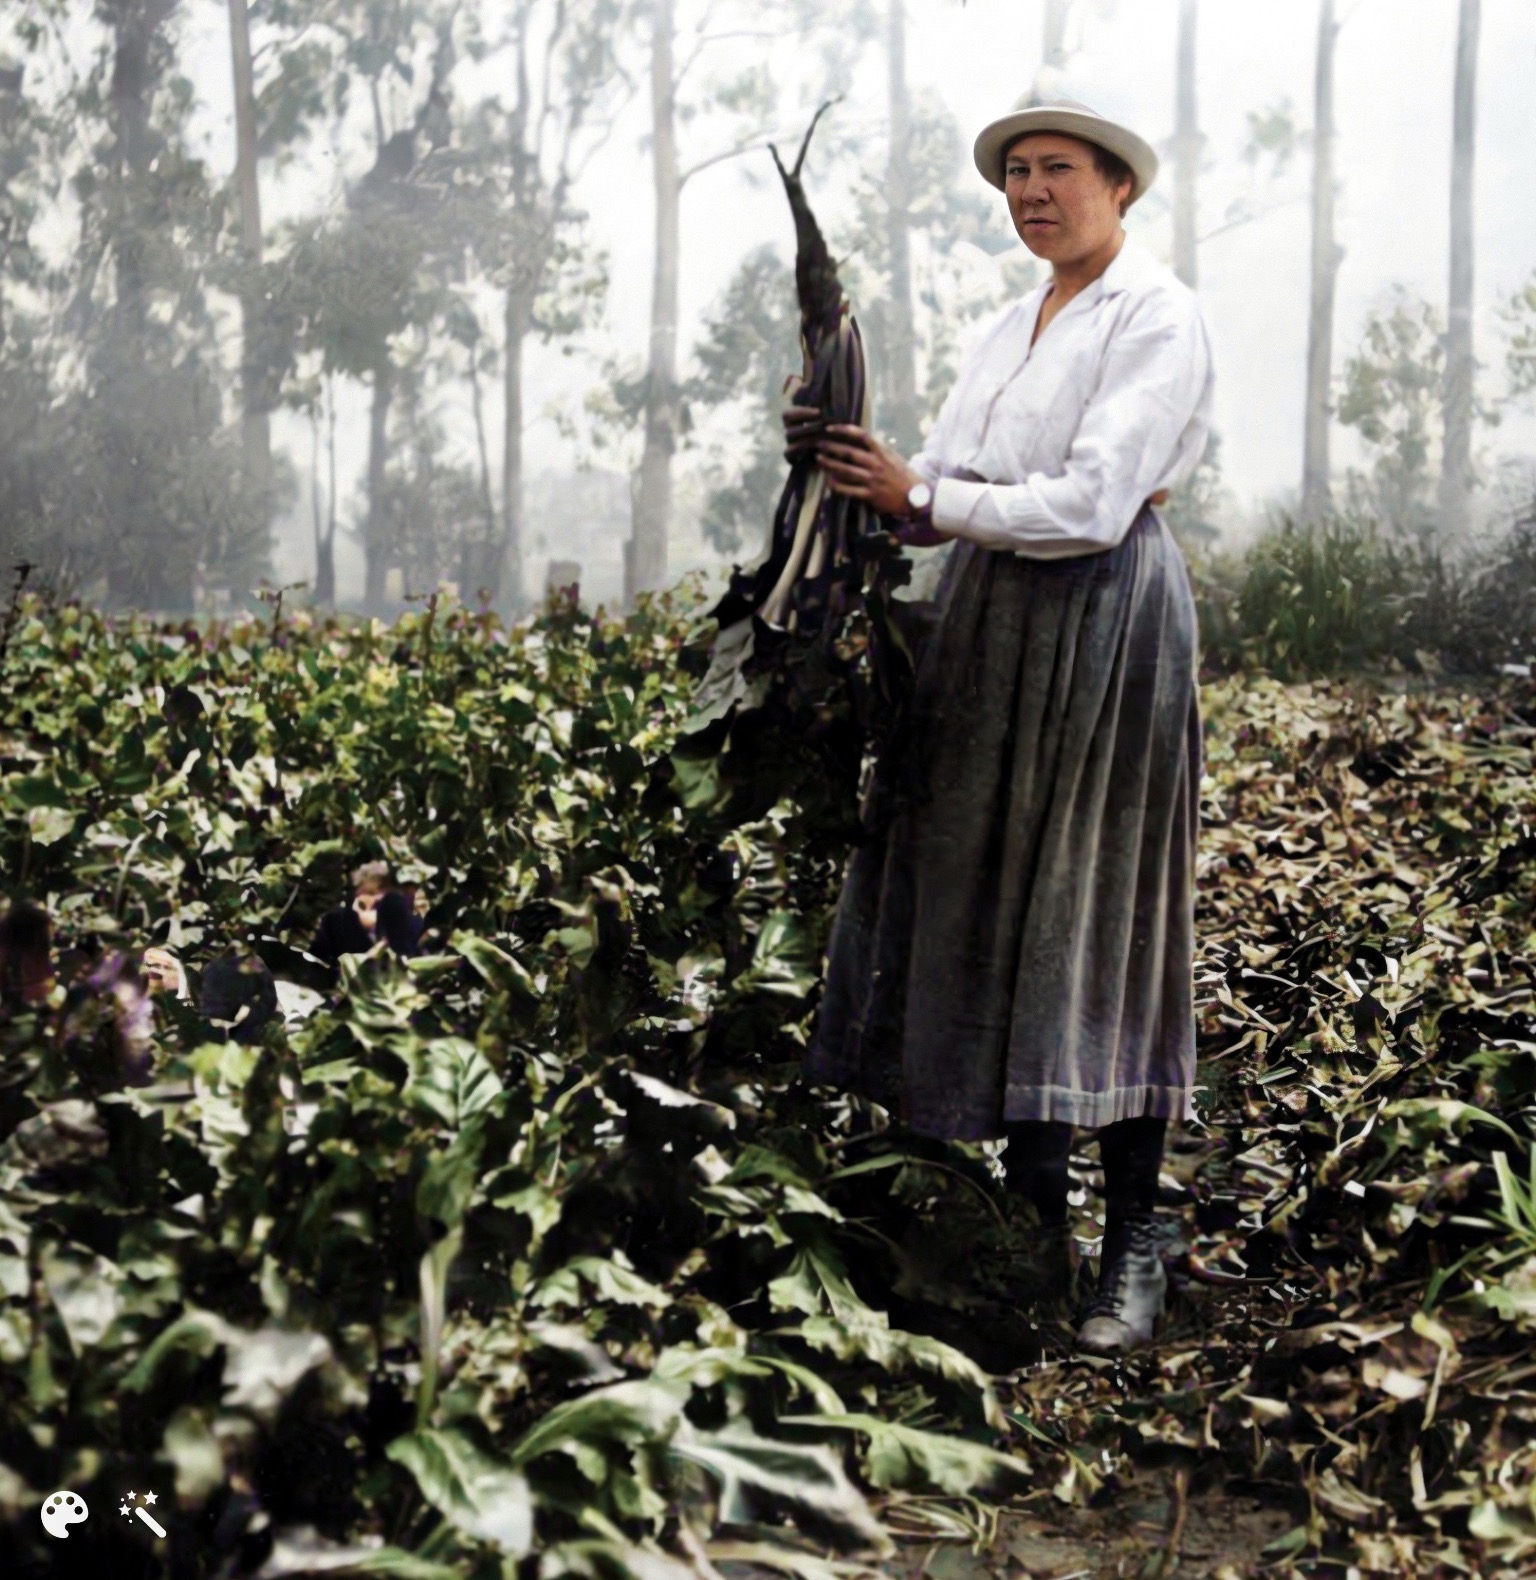 Katherine Esau standing in an Oxnard sugar beet field 1923